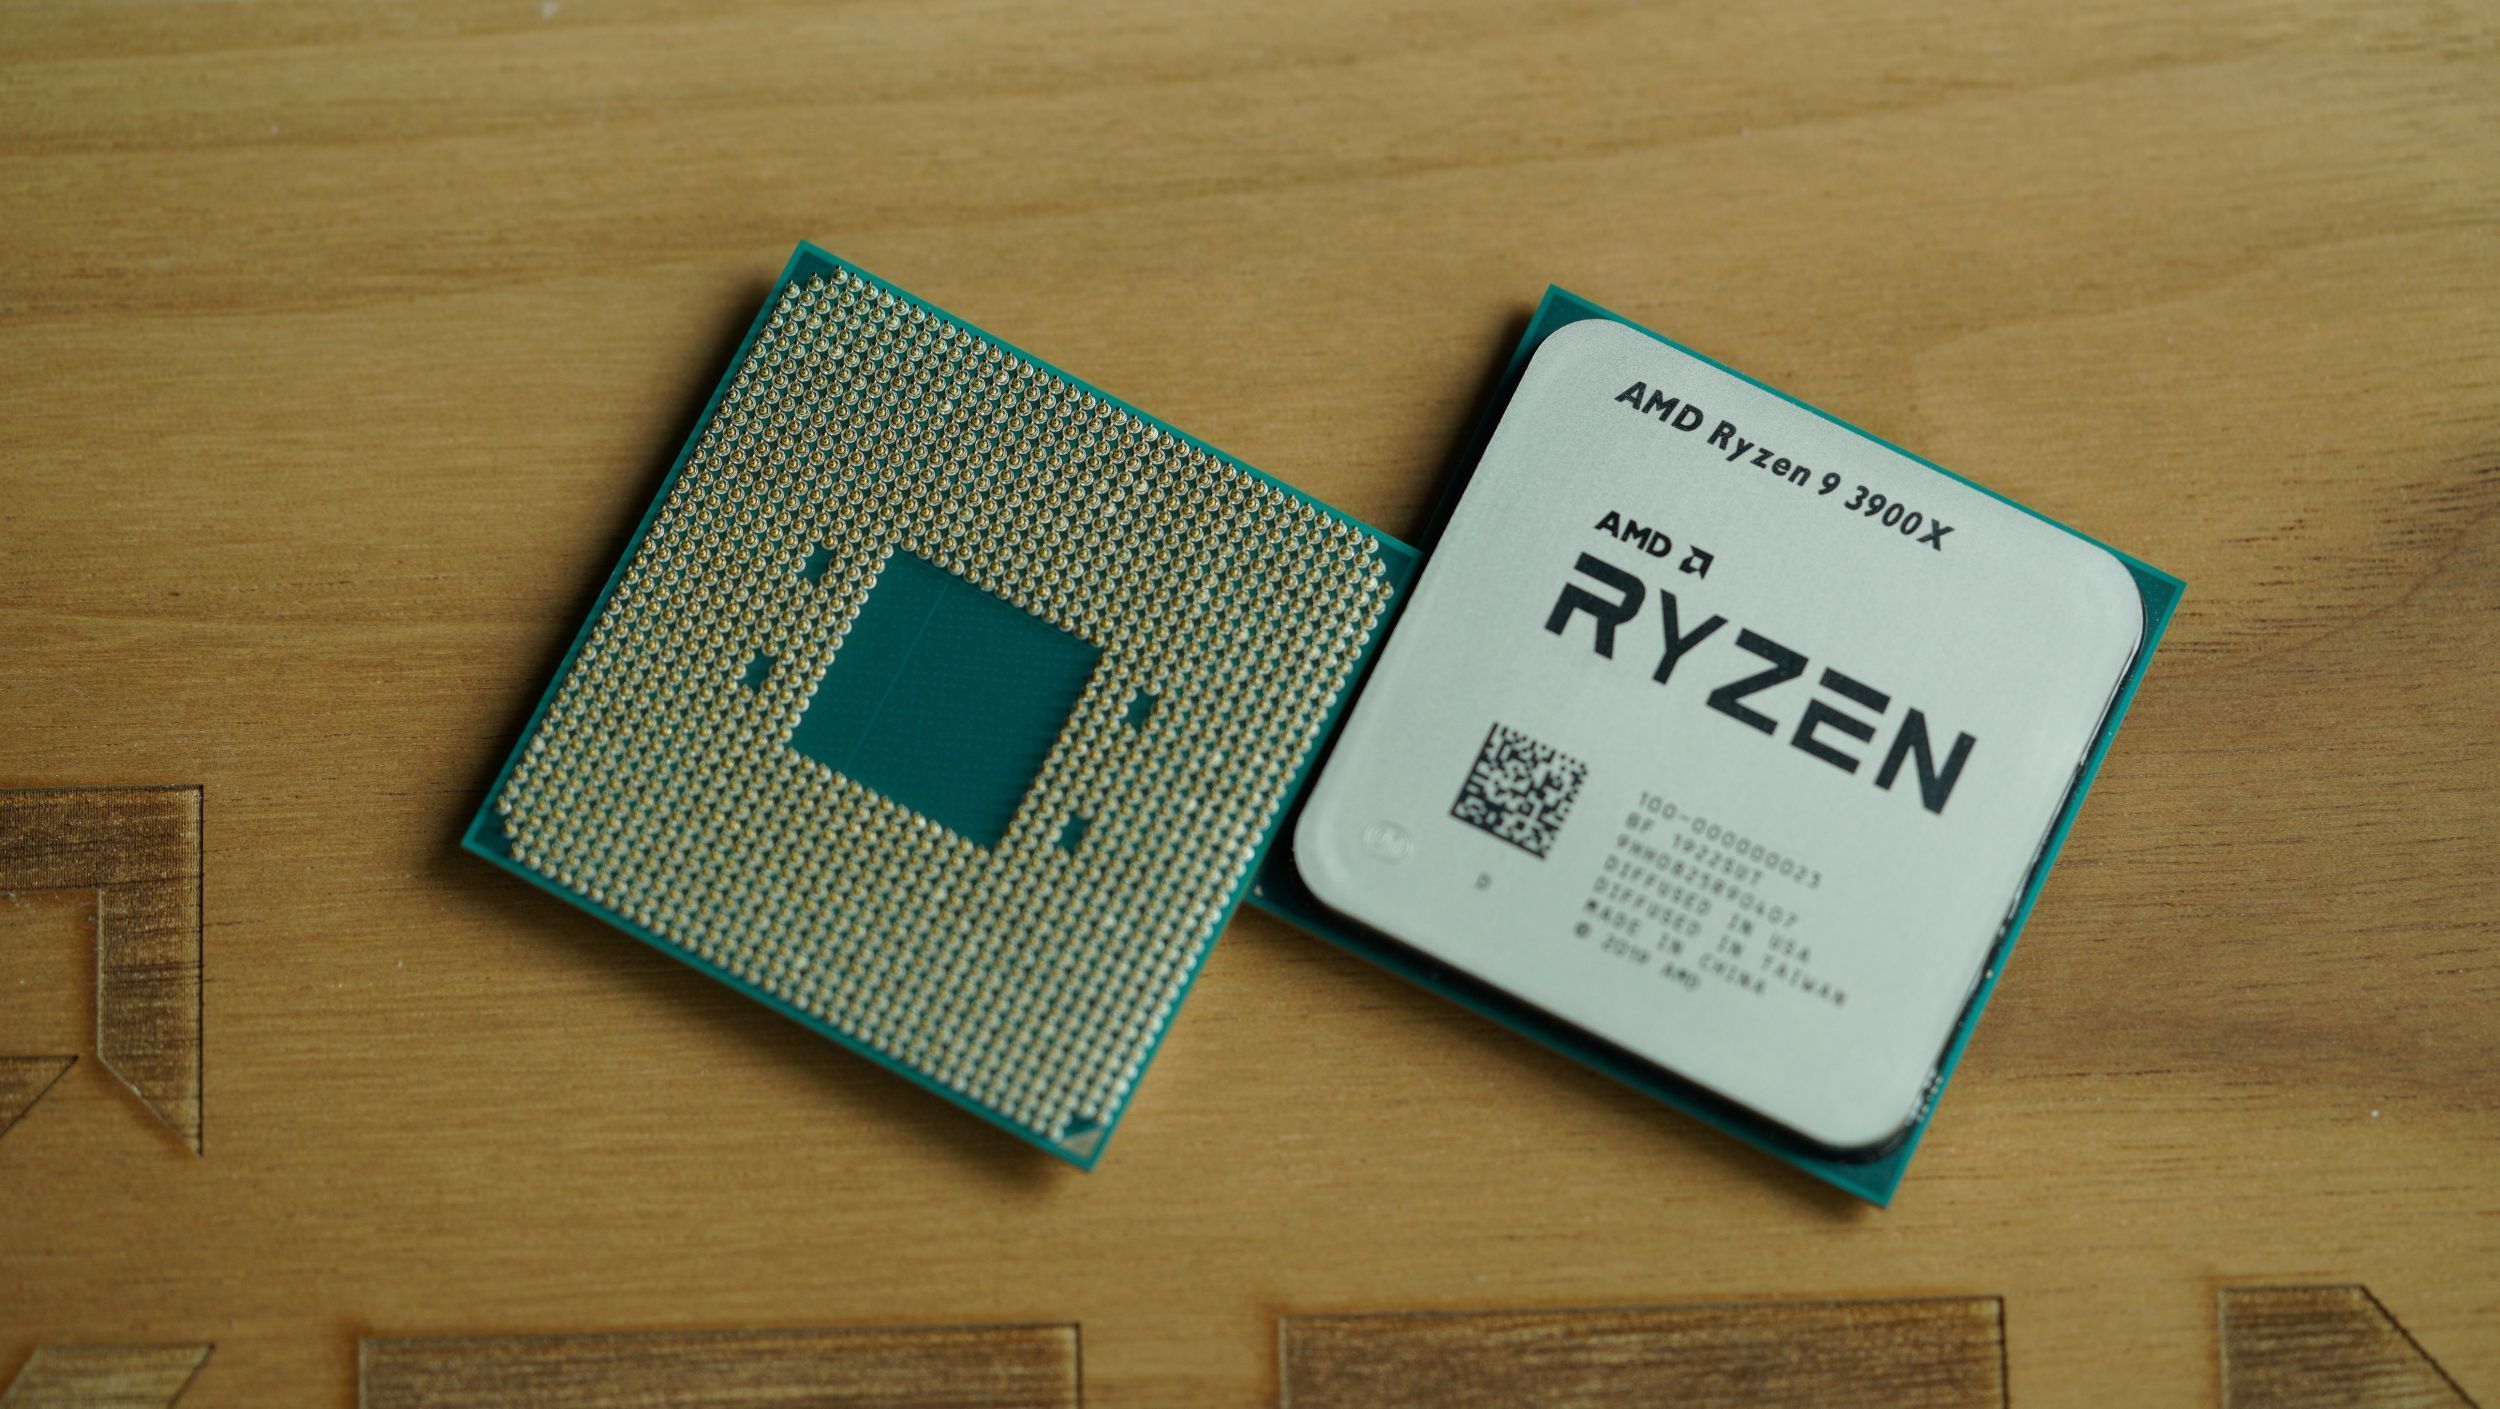 Райзен 9 купить. Процессор AMD Ryzen 9. Процессор AMD Ryzen 9 3900x. Процессор AMD Ryzen 9 5900x. AMD Ryzen 9 3900x 12-Core Processor.